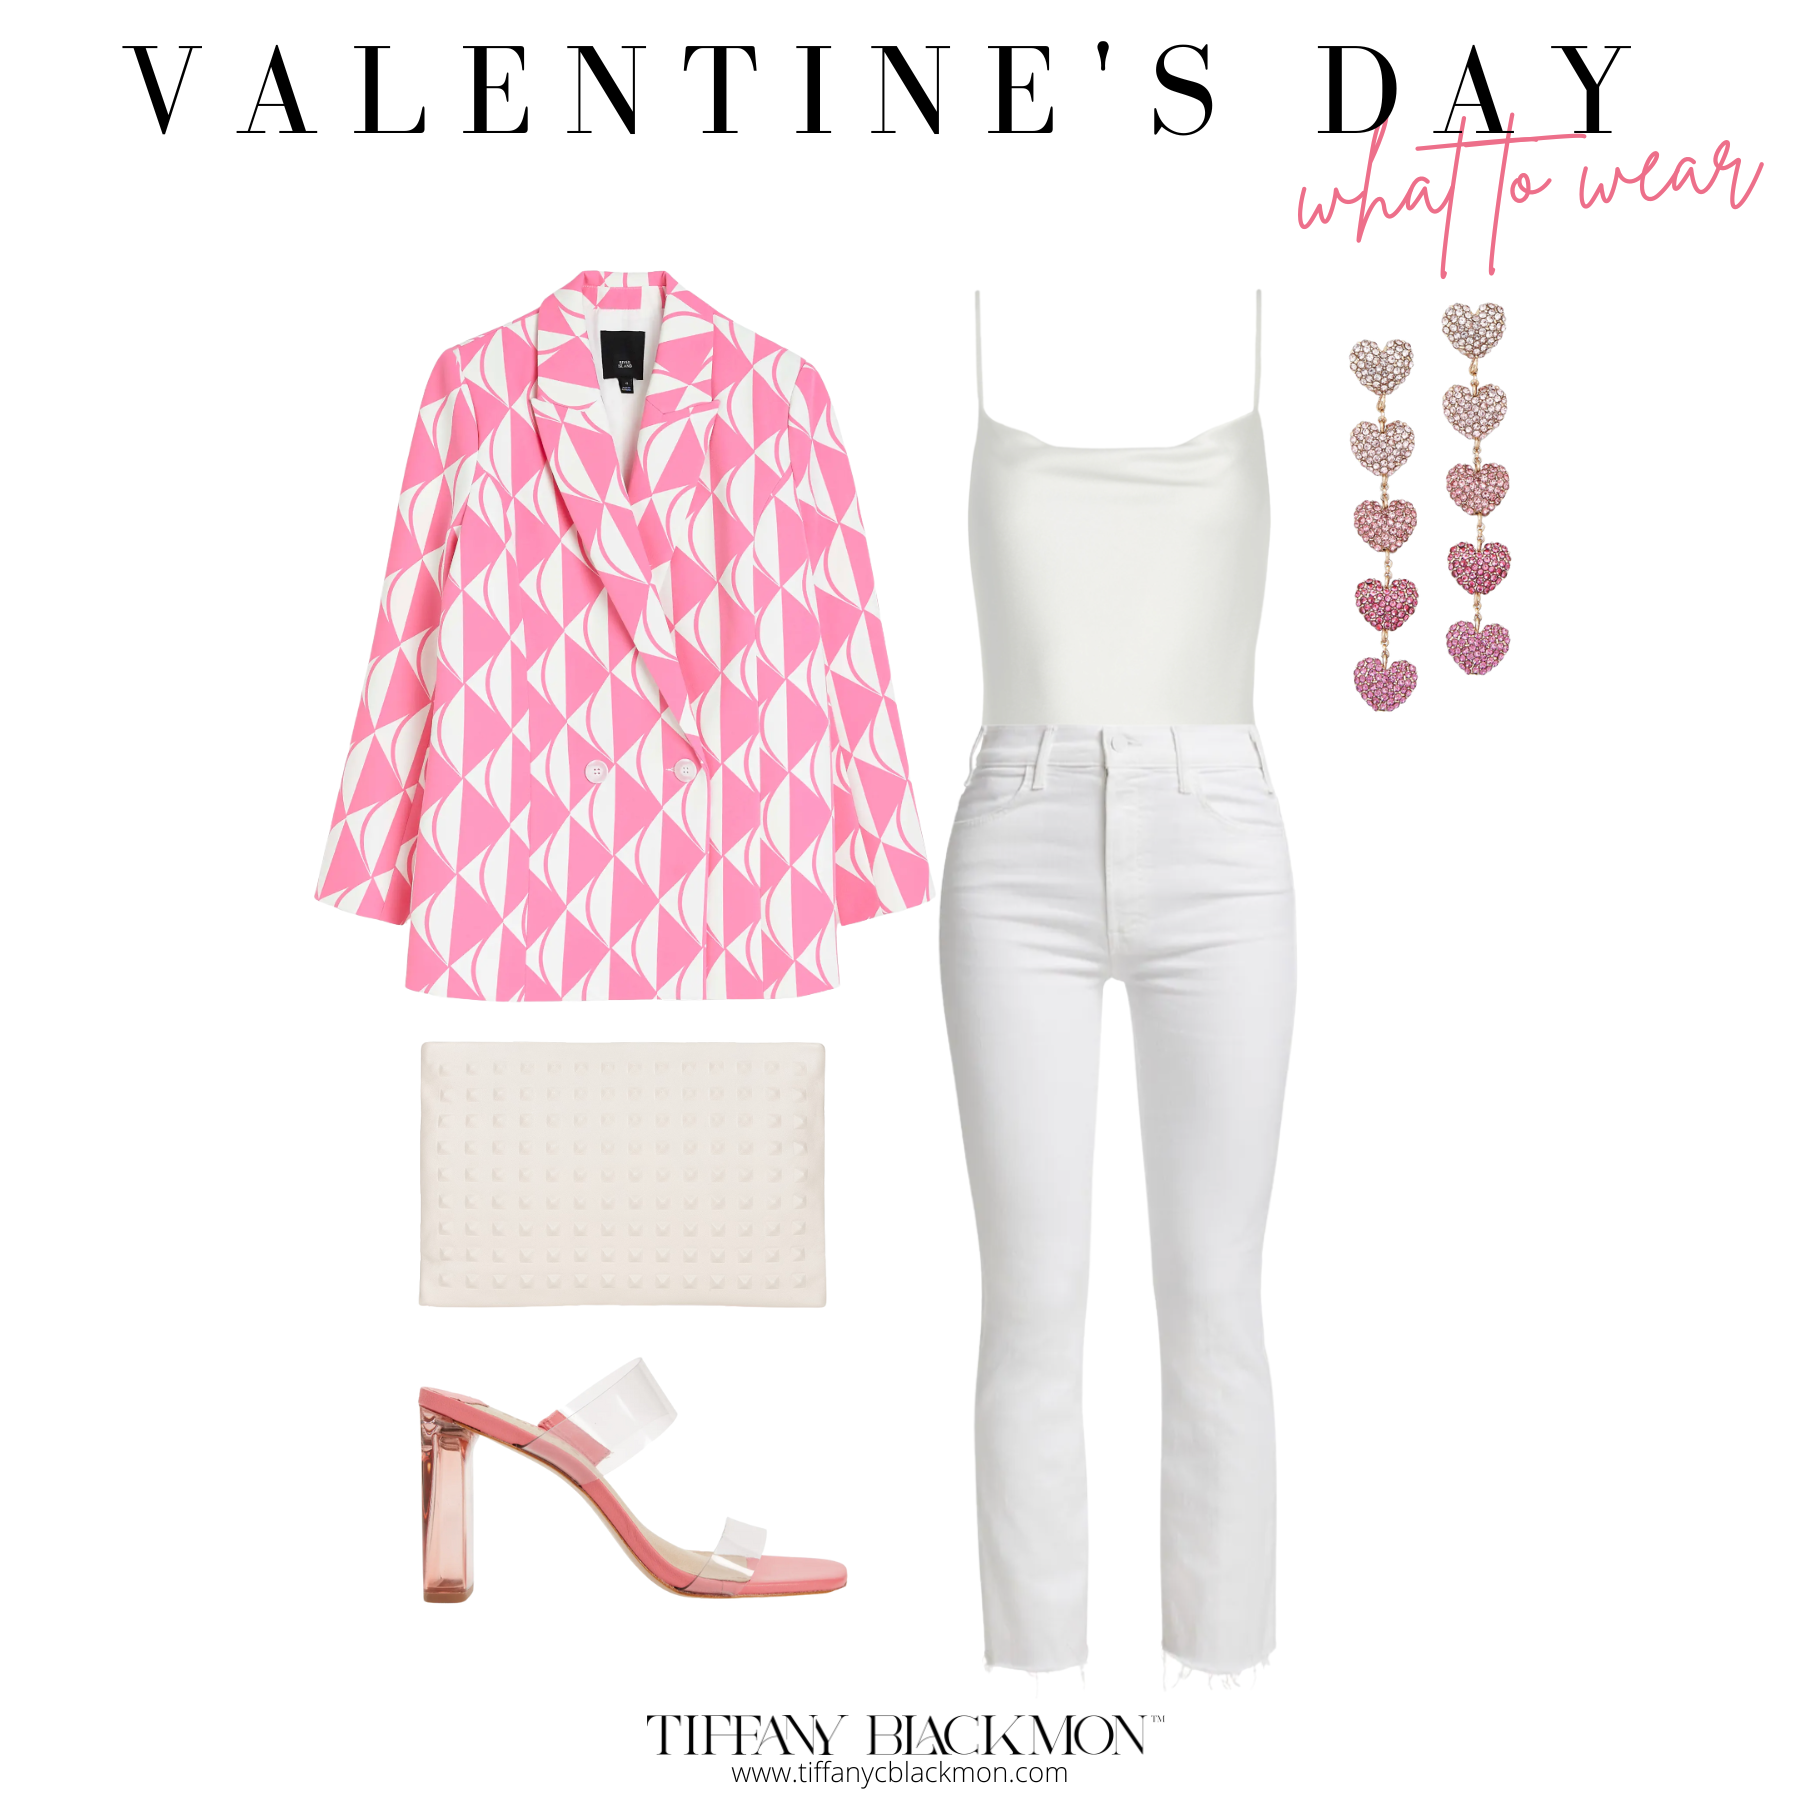 Valentine's Day: What to Wear
#blazer #tanktop #cami #bodysuit #heartearrings #heels #clutch #datenight 